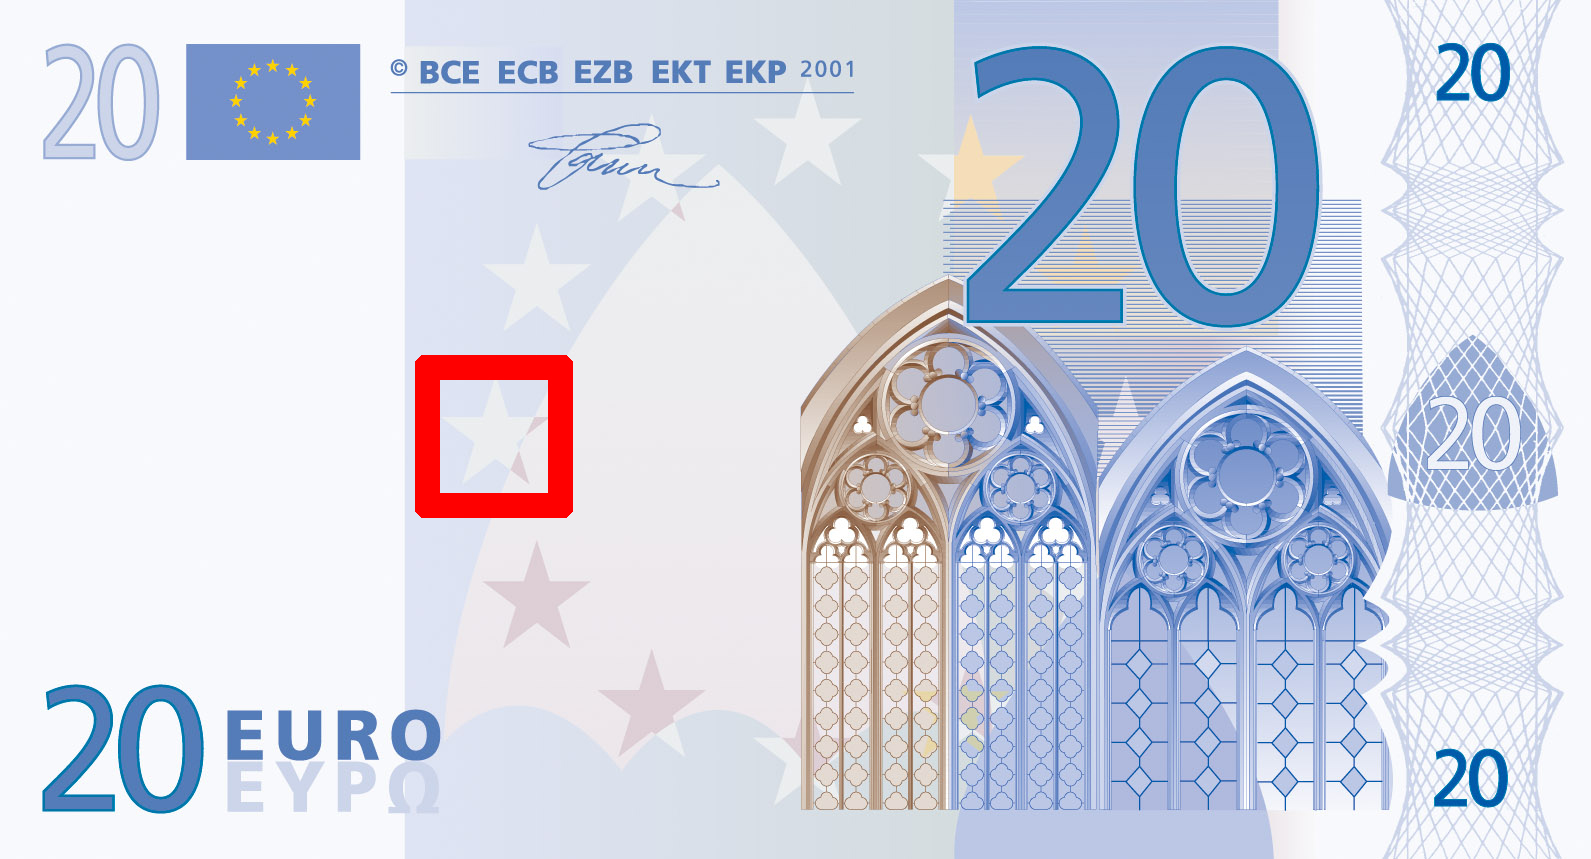 Euro : Informations et Billets en Euros - Monnaie Européenne